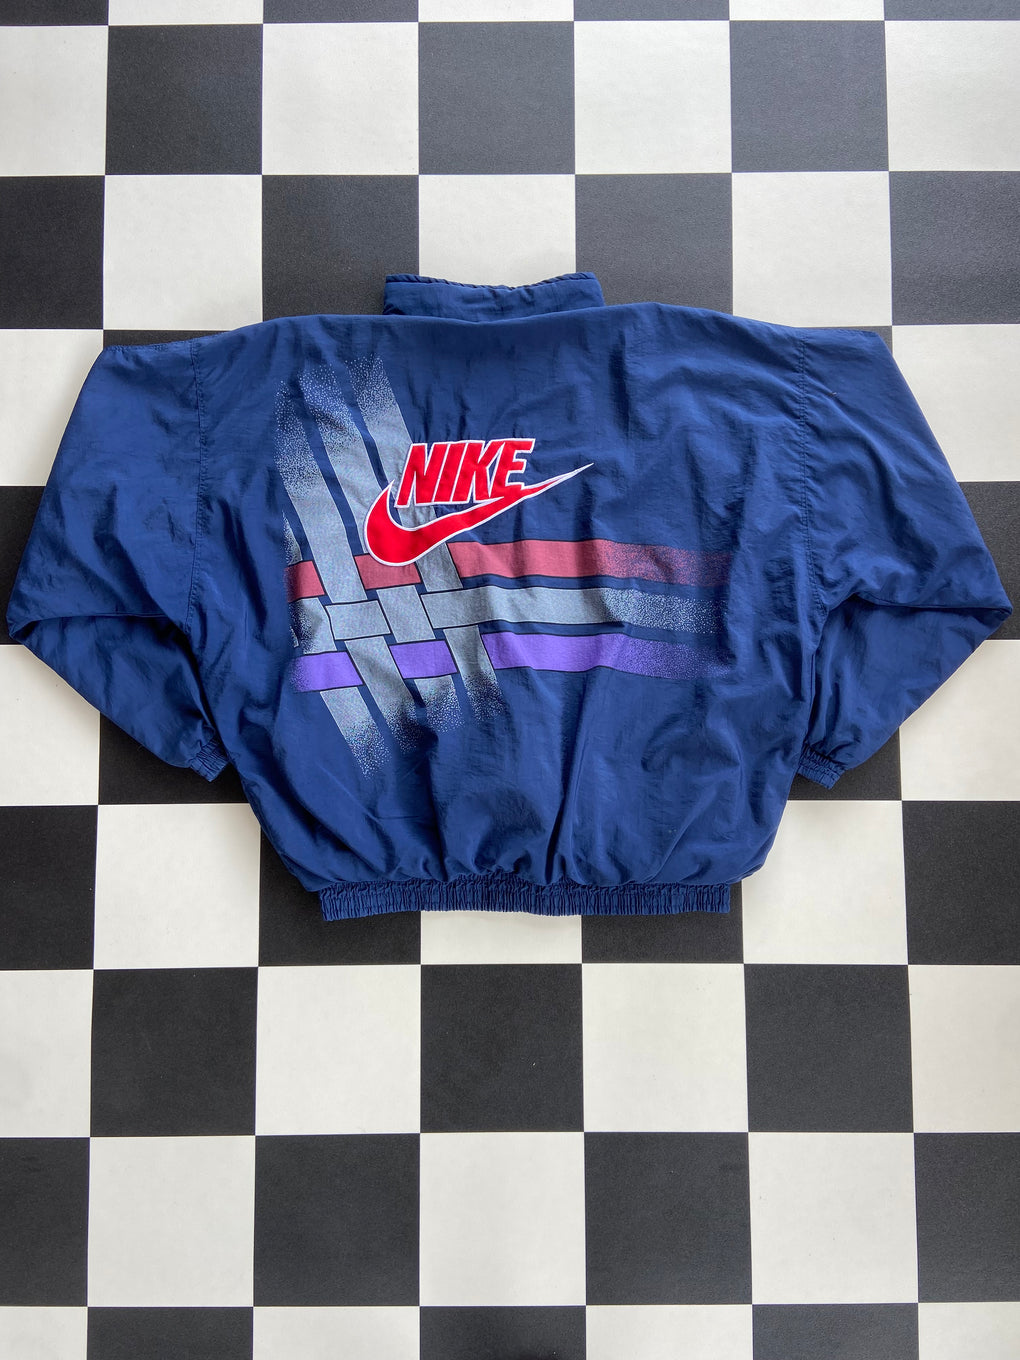 Vintage 90s Nike 'Overlap' Sports Jacket (M)